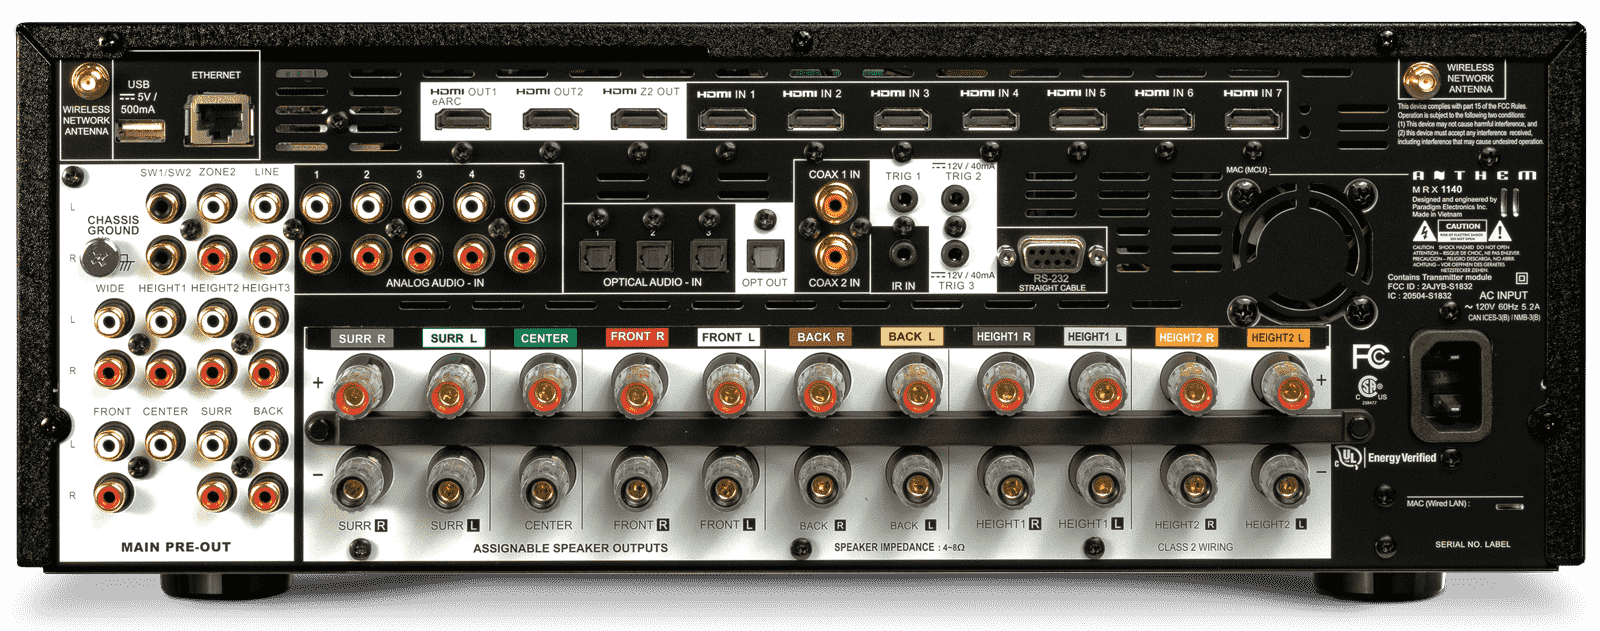 Anthem MRX 1140 15.2 AV Amplifier